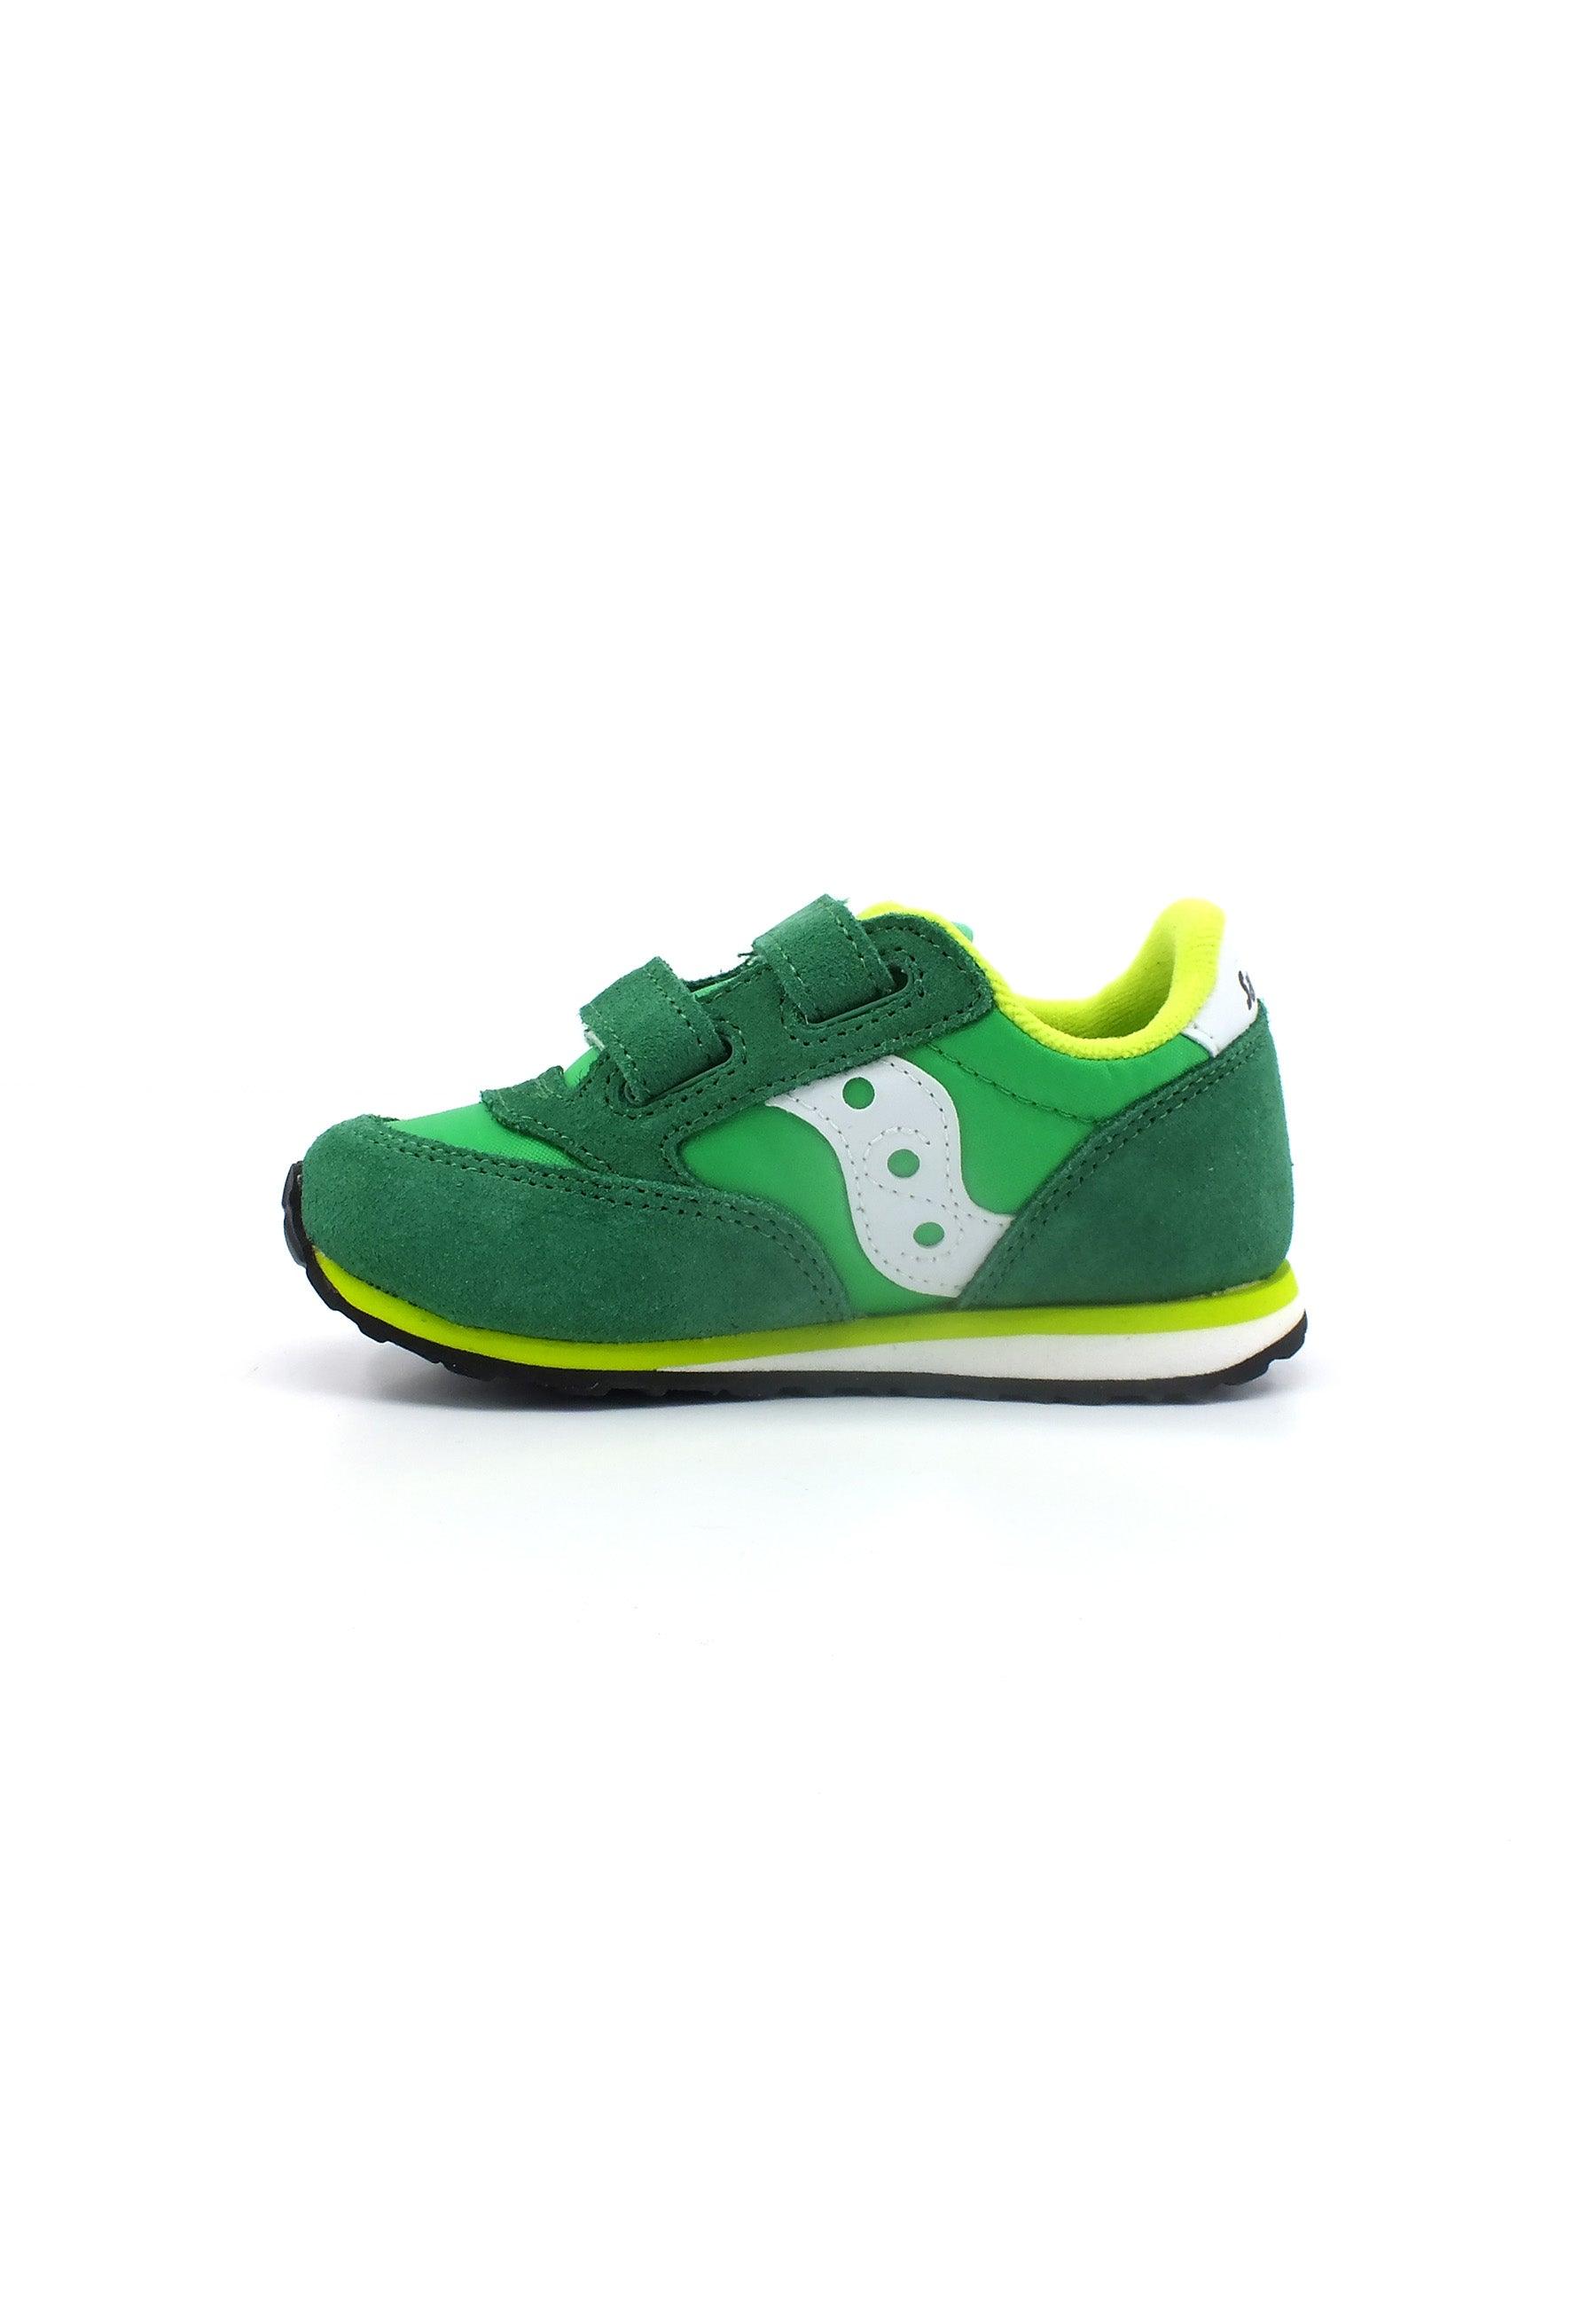 SAUCONY Baby Jazz Sneaker Bimbo Green Lime White SL267016 - Sandrini Calzature e Abbigliamento